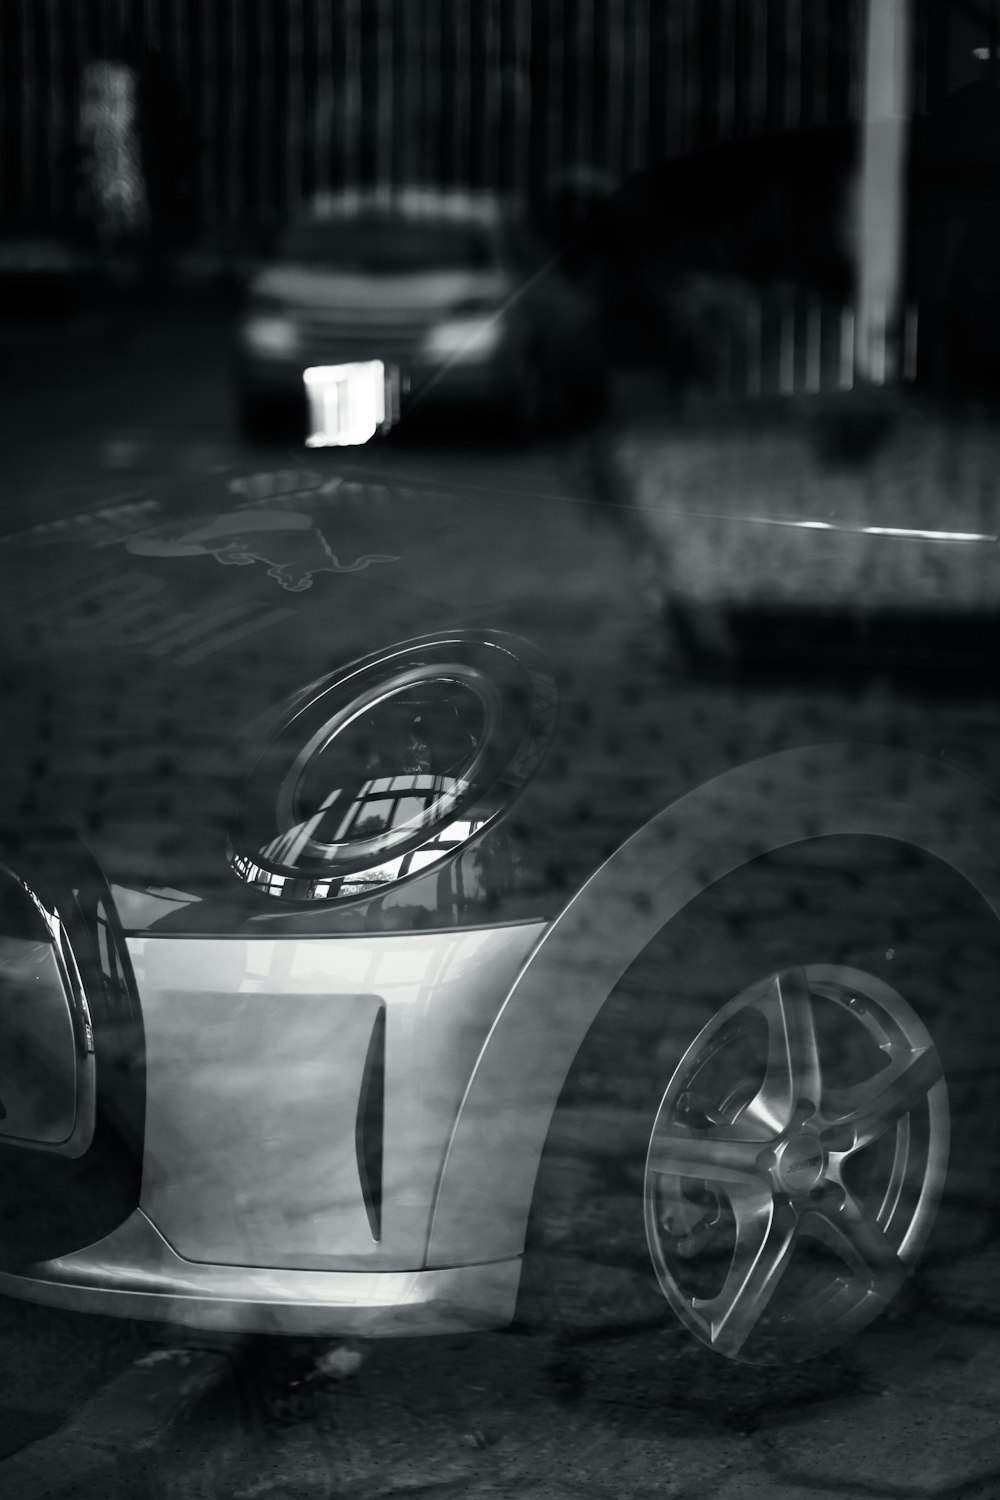 a close-up of a car's wheel